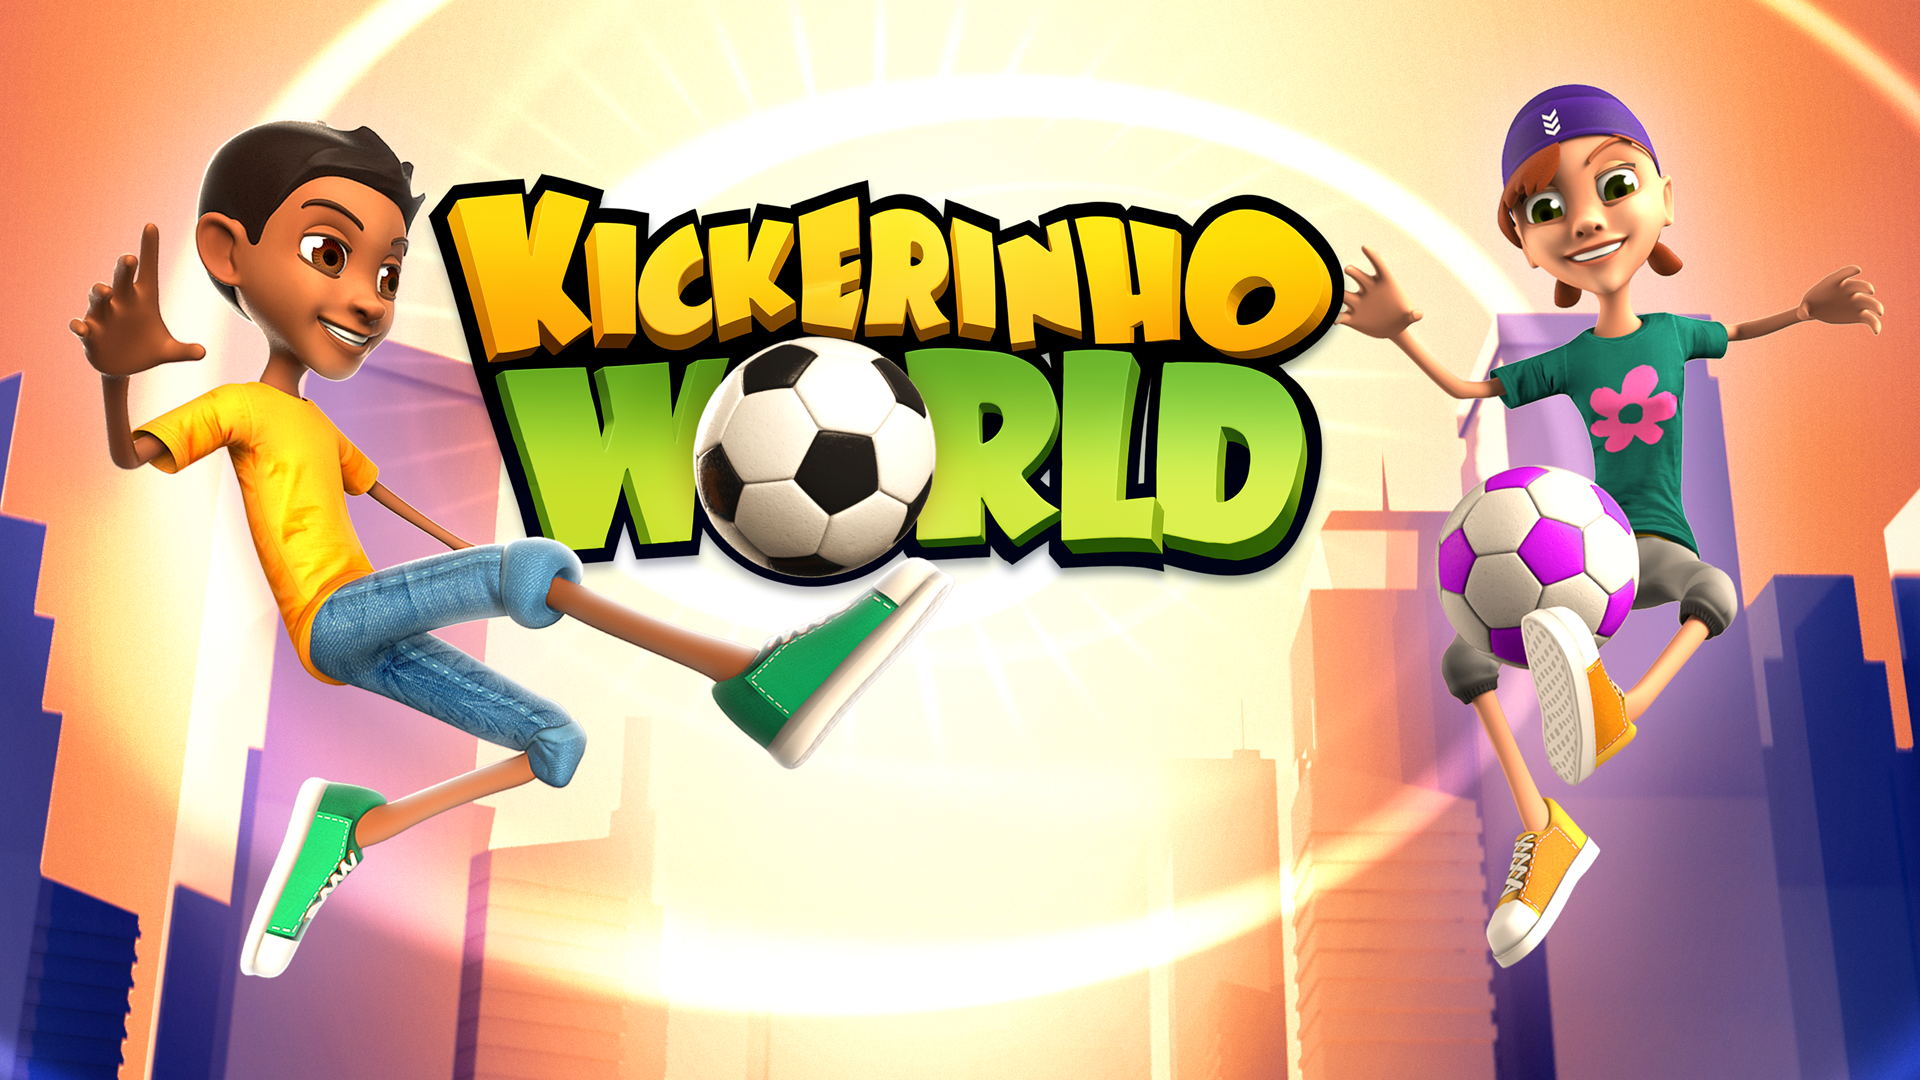 Kickerinho World - GameBy.pl